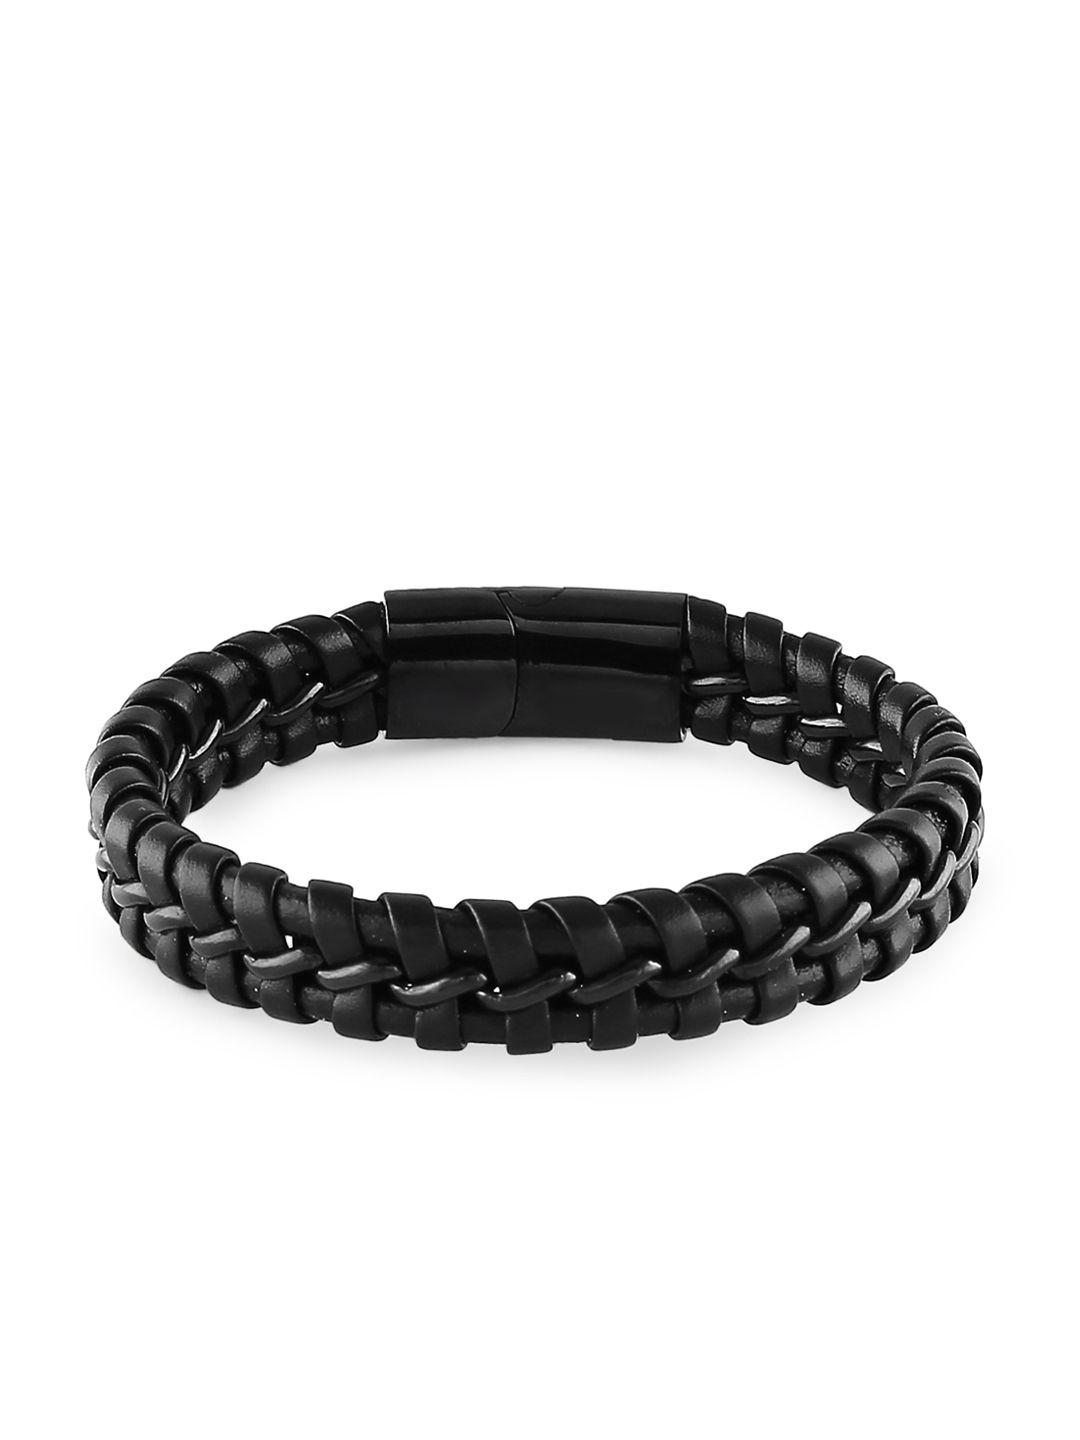 bodha men black leather wraparound bracelet